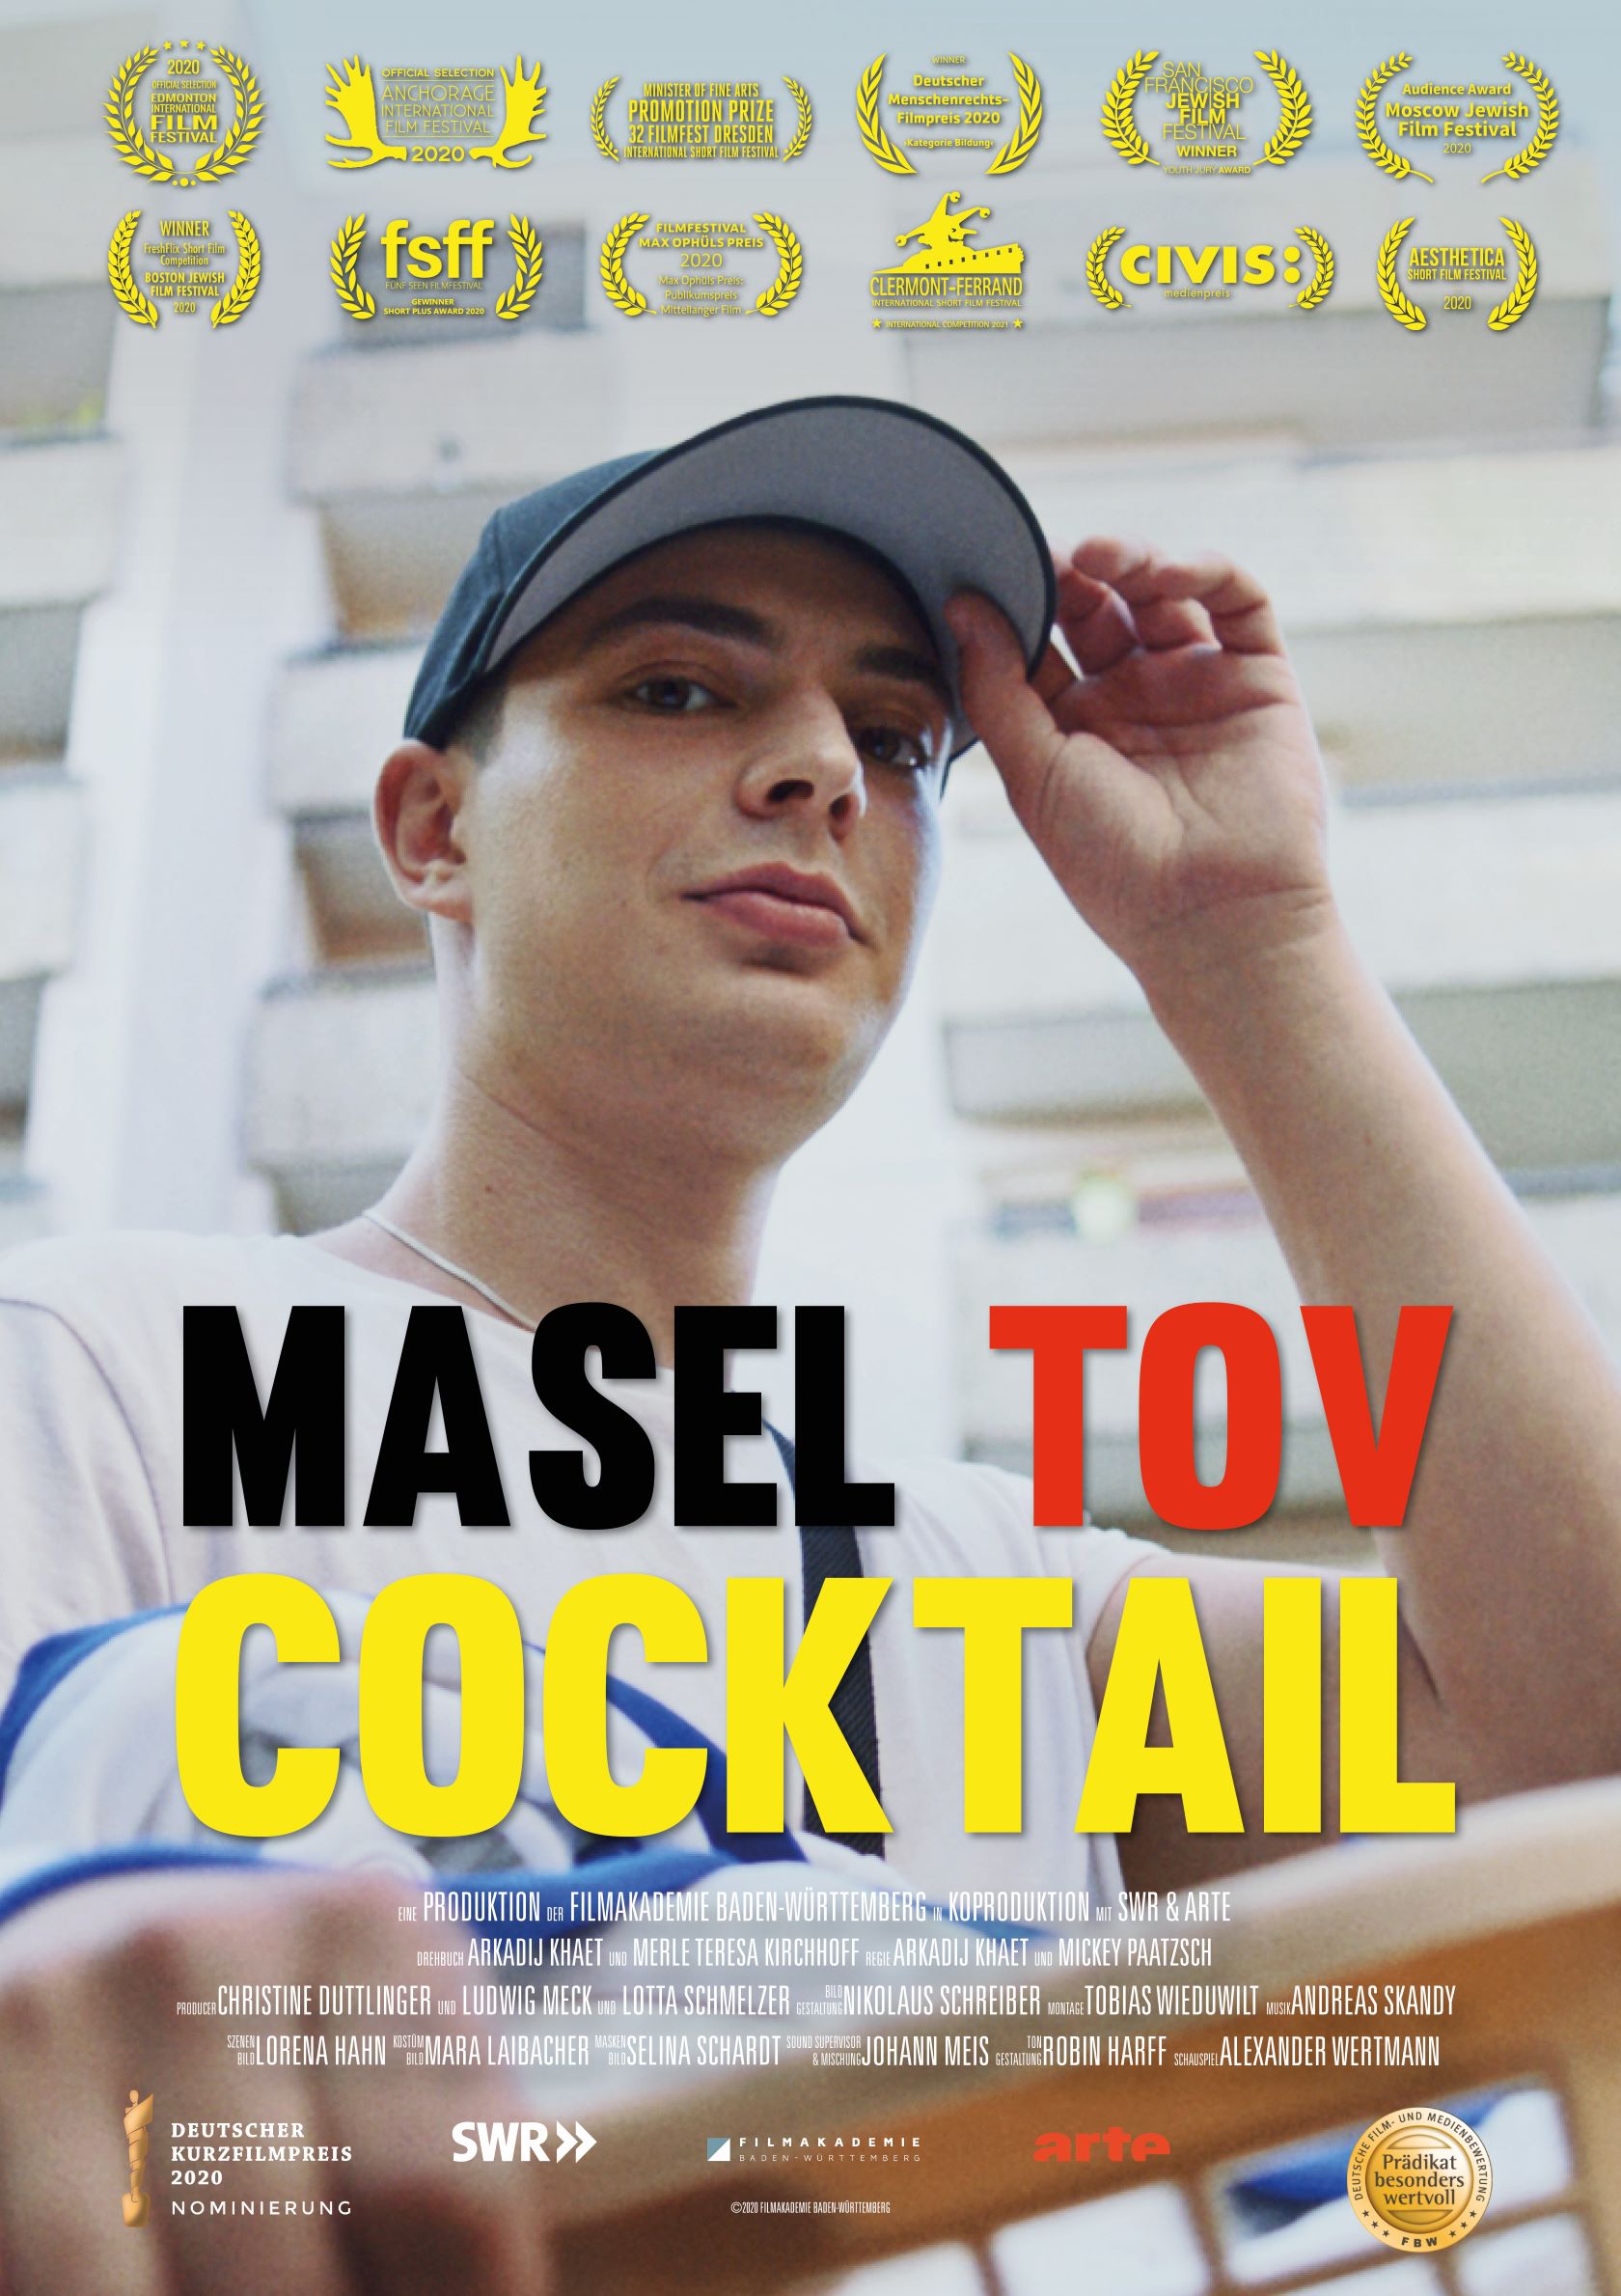 film poster of "Masel Tov Cocktail"